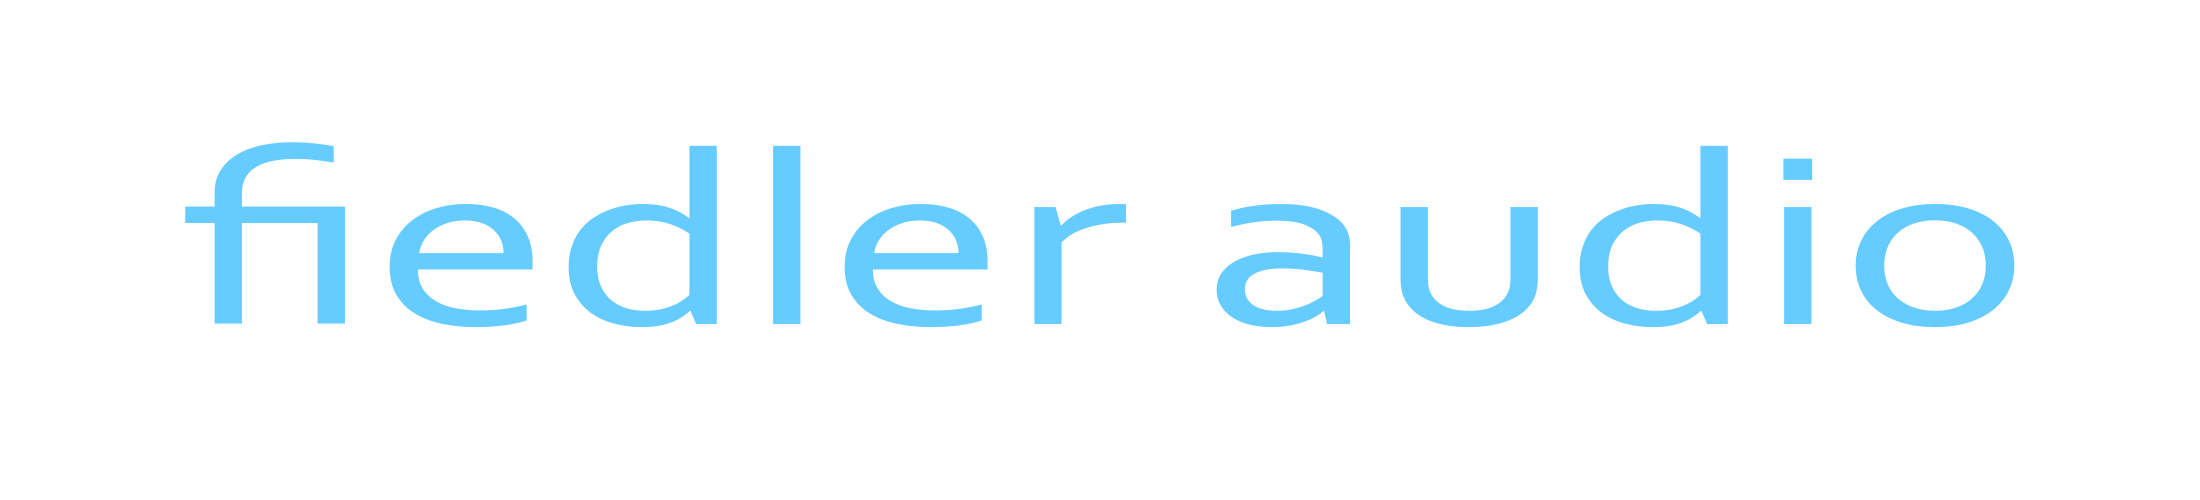 Fiedler Audio-logo blue